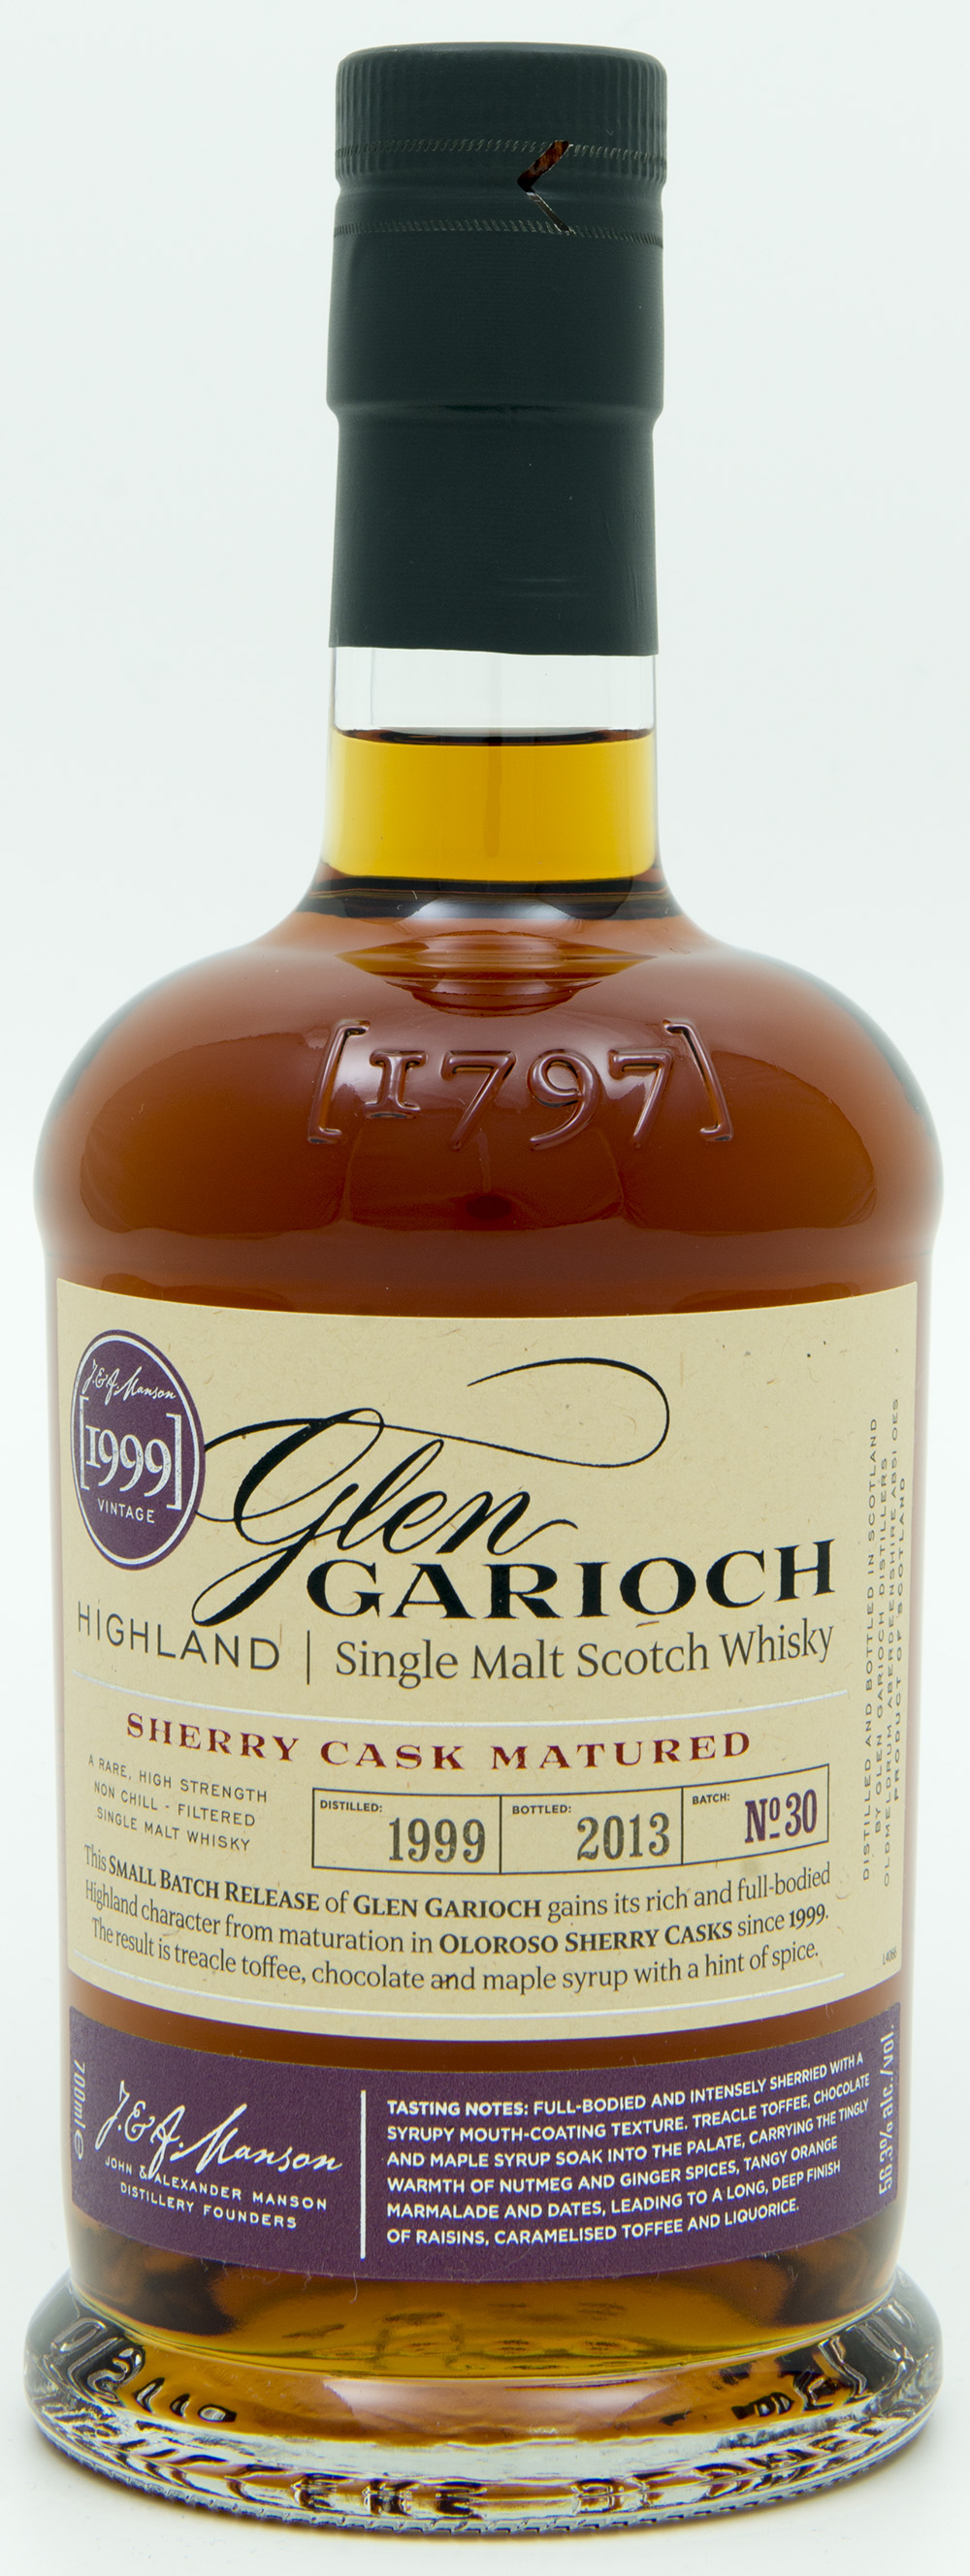 Billede: DSC_6558 GlenGarioch Batch 30 - Sherry Cask Matured 1999-2013 - bottle front.jpg